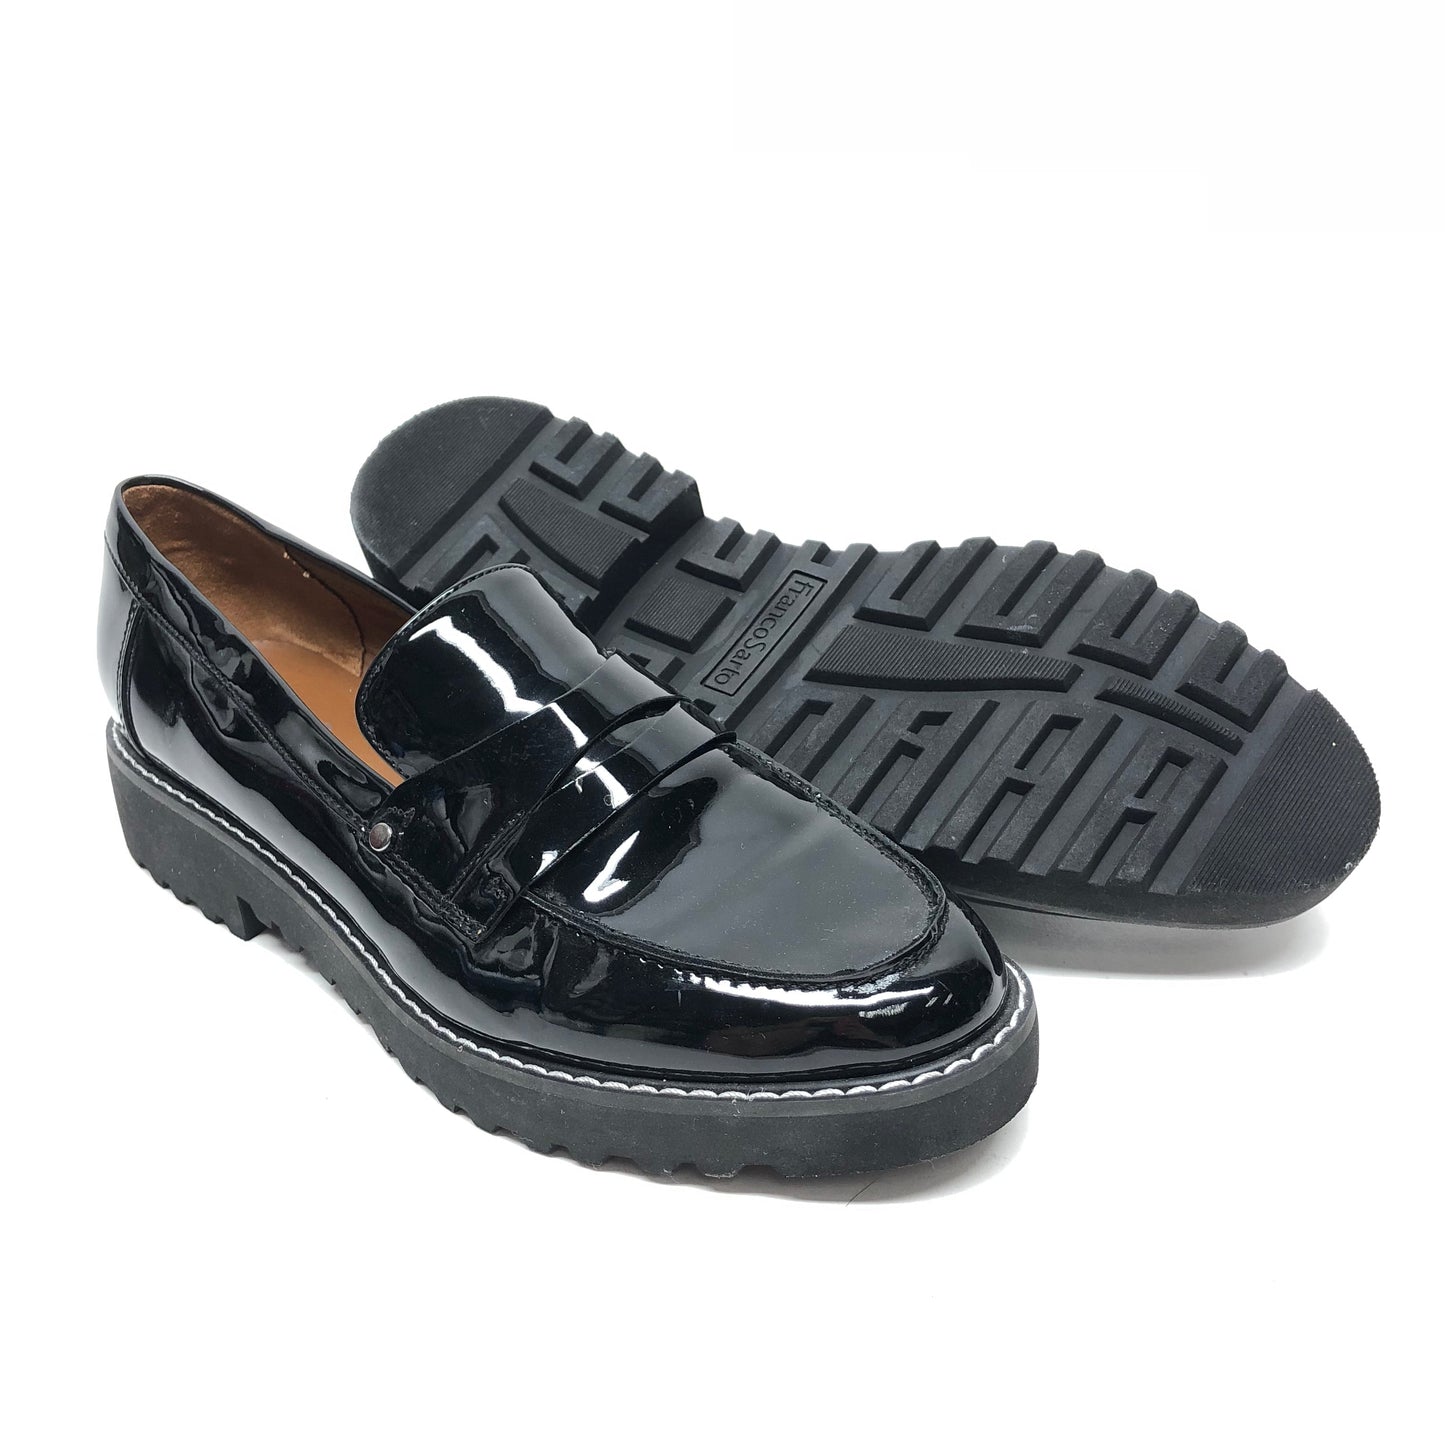 Black Shoes Flats Franco Sarto, Size 8.5